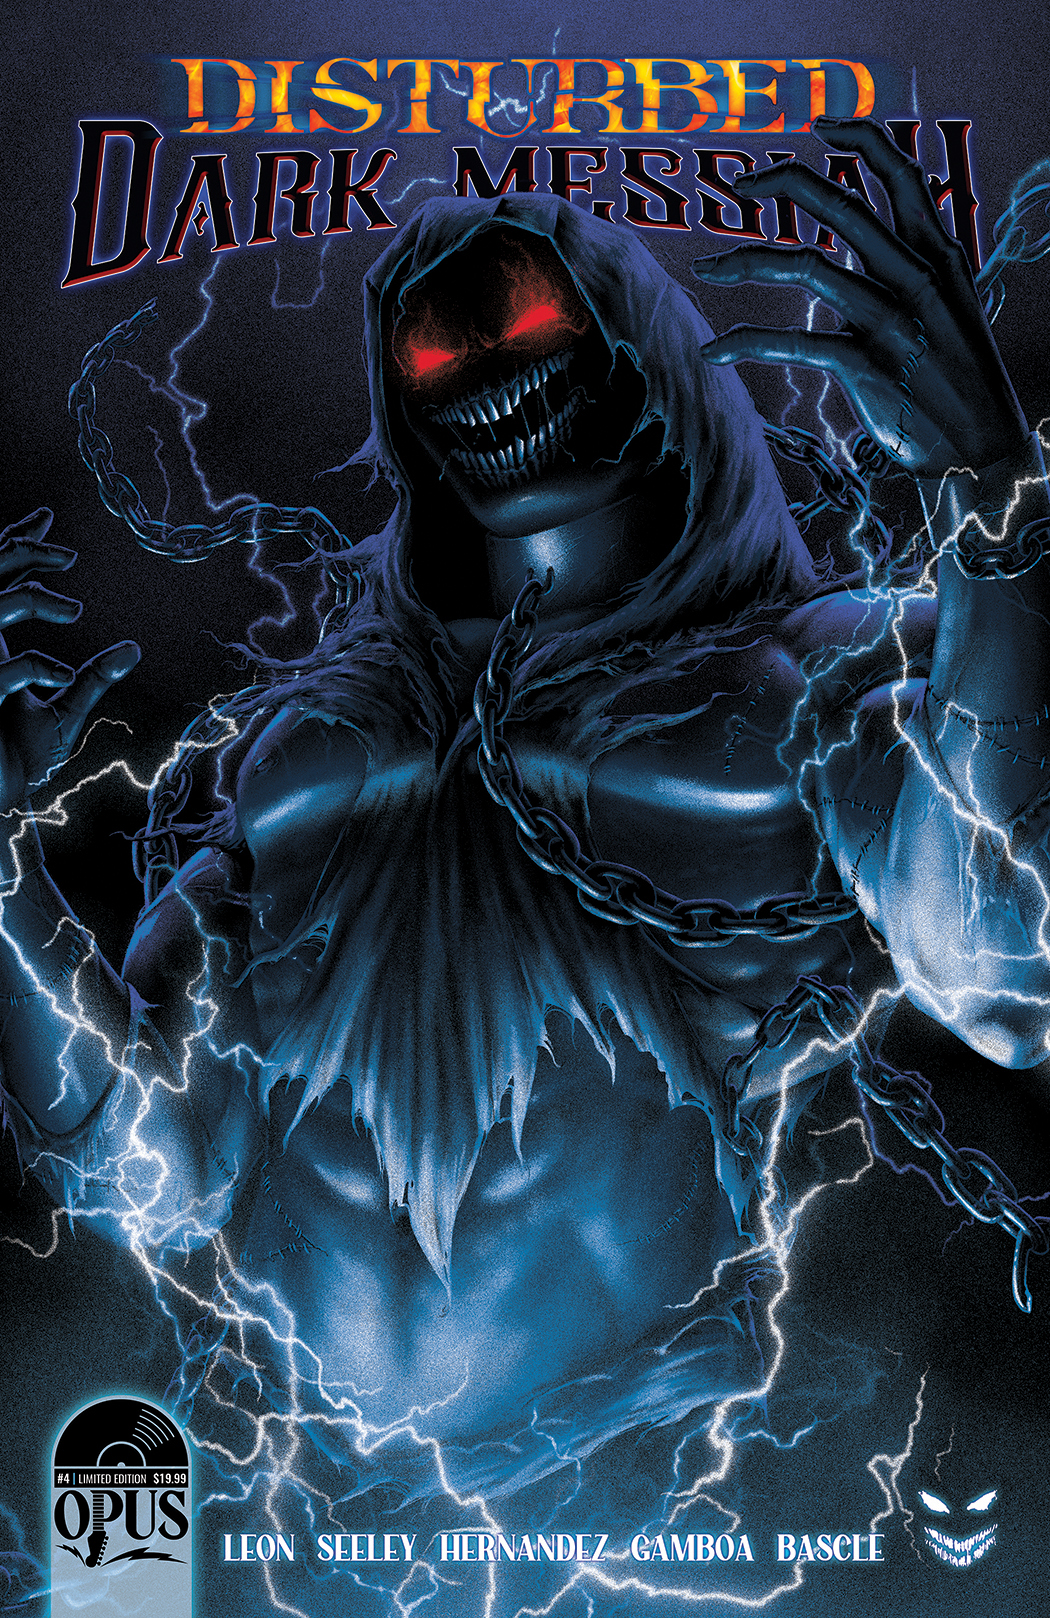 Disturbed: Dark Messiah Comic Book Issue #4 Cover 